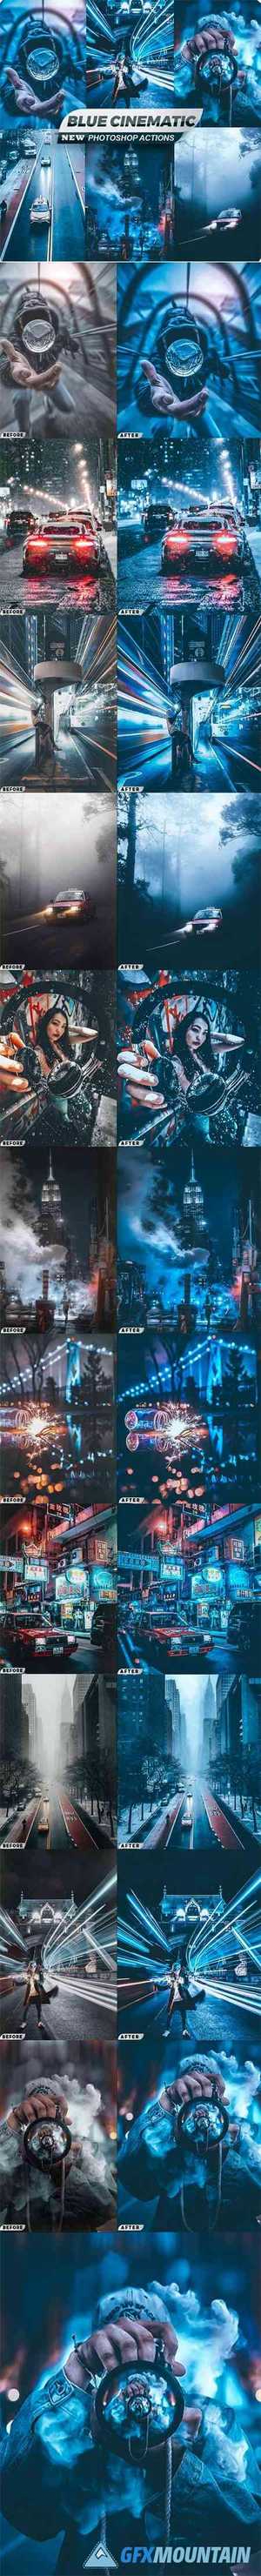 Blue Cinematic City Photoshop Actions 26544127